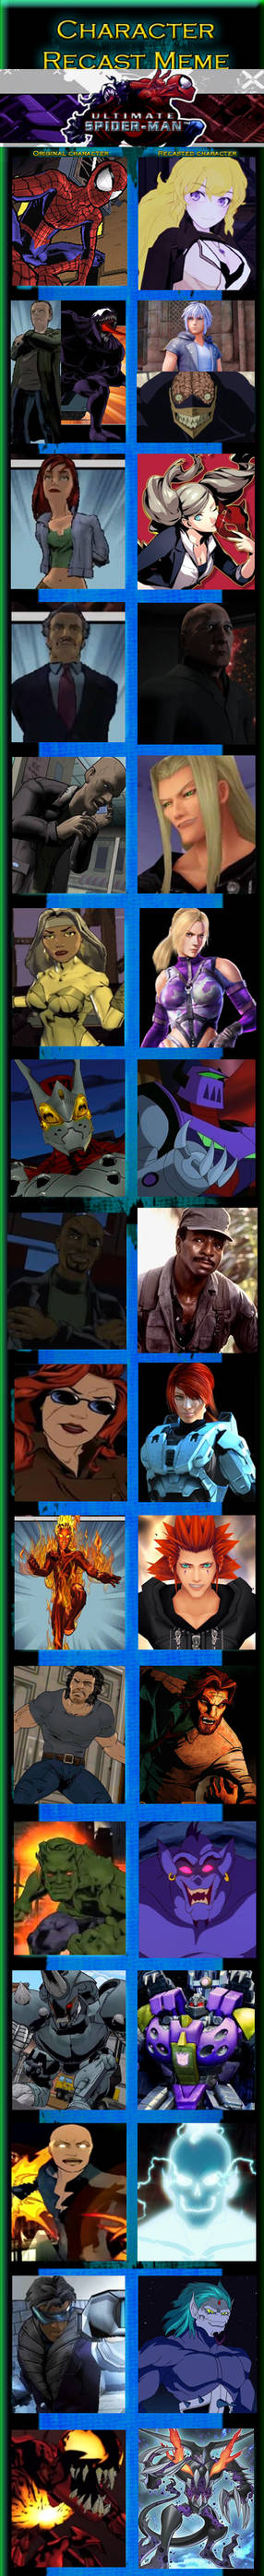 My The Amazing Spider-Man Cast by JackSkellington416 on DeviantArt